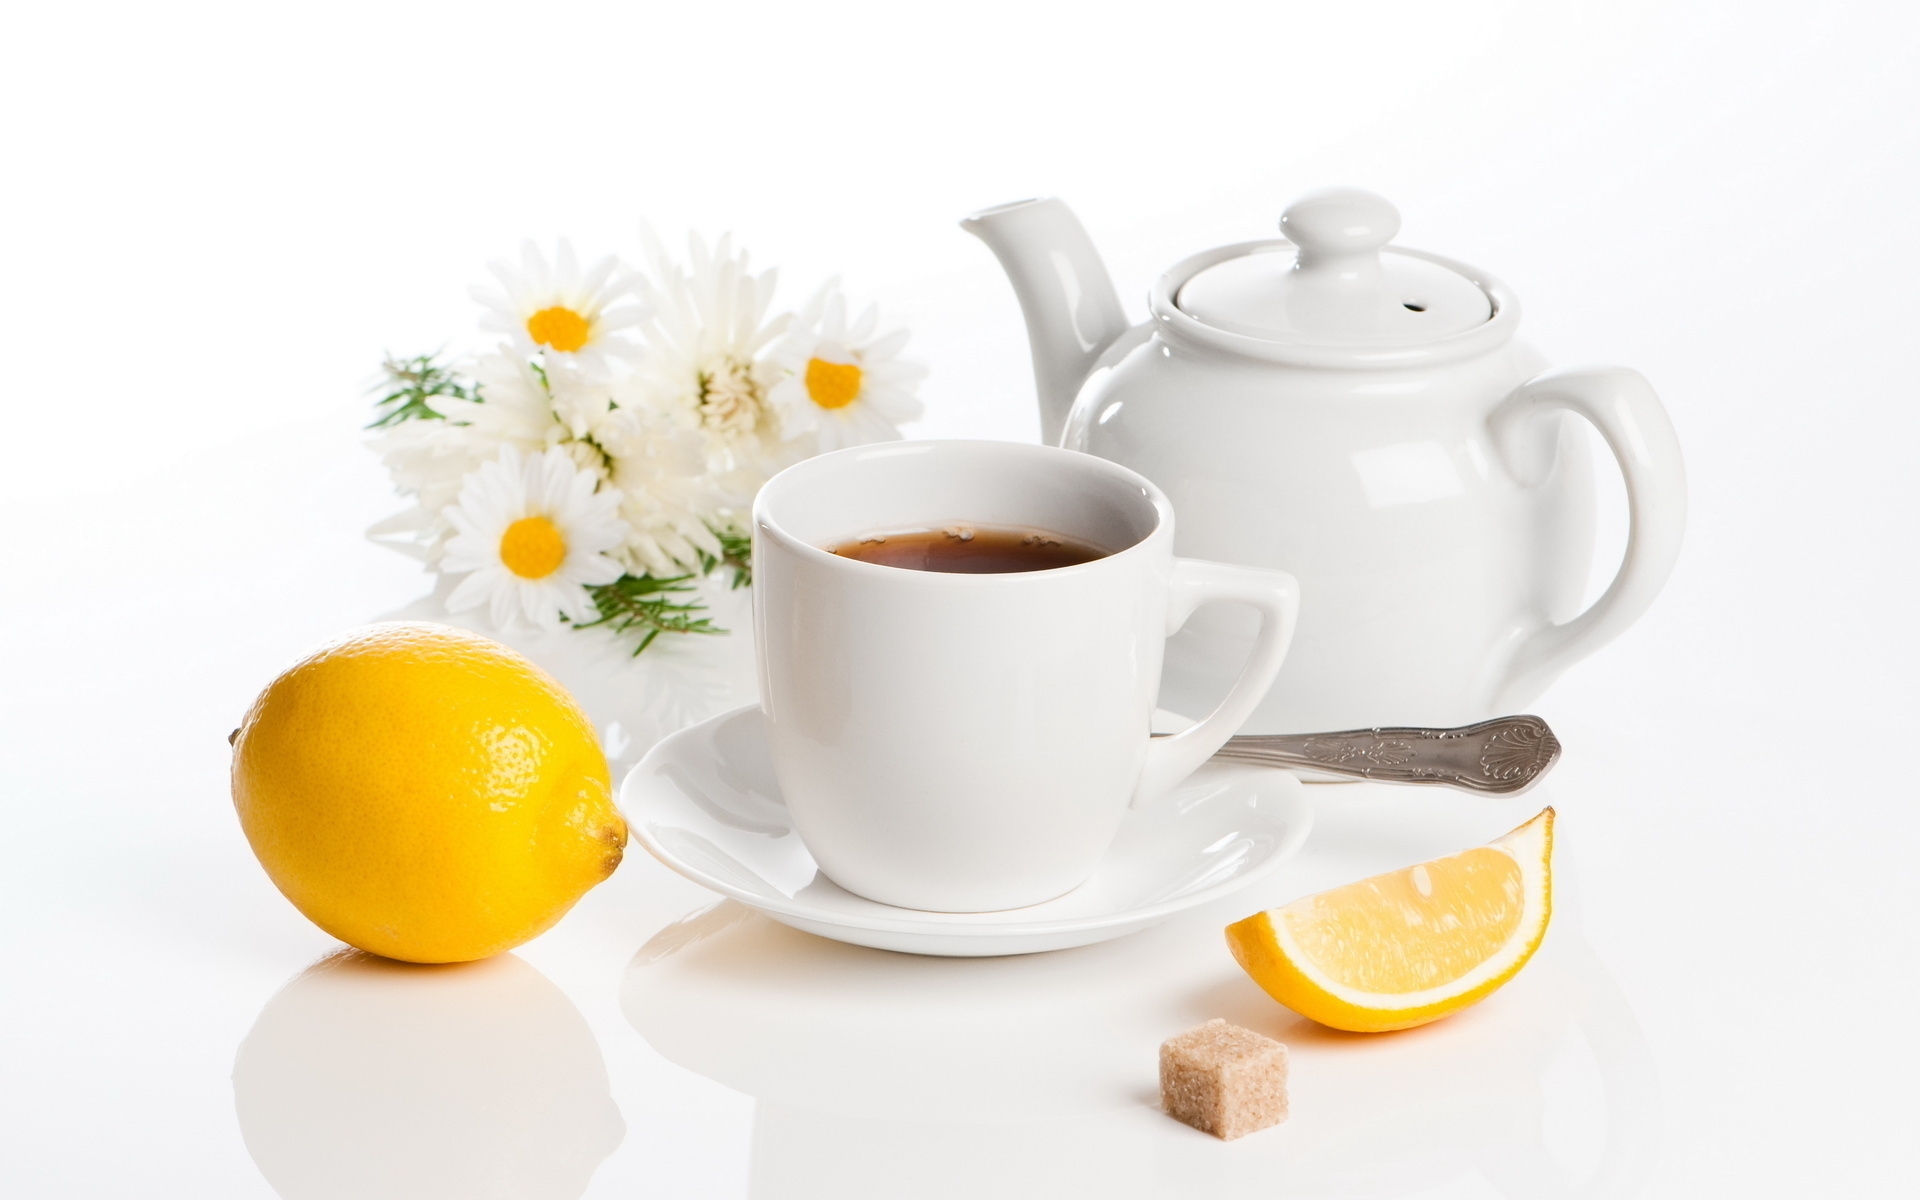 Картинки Обслуживание, чай, лимон, сахар фото и обои на рабочий стол